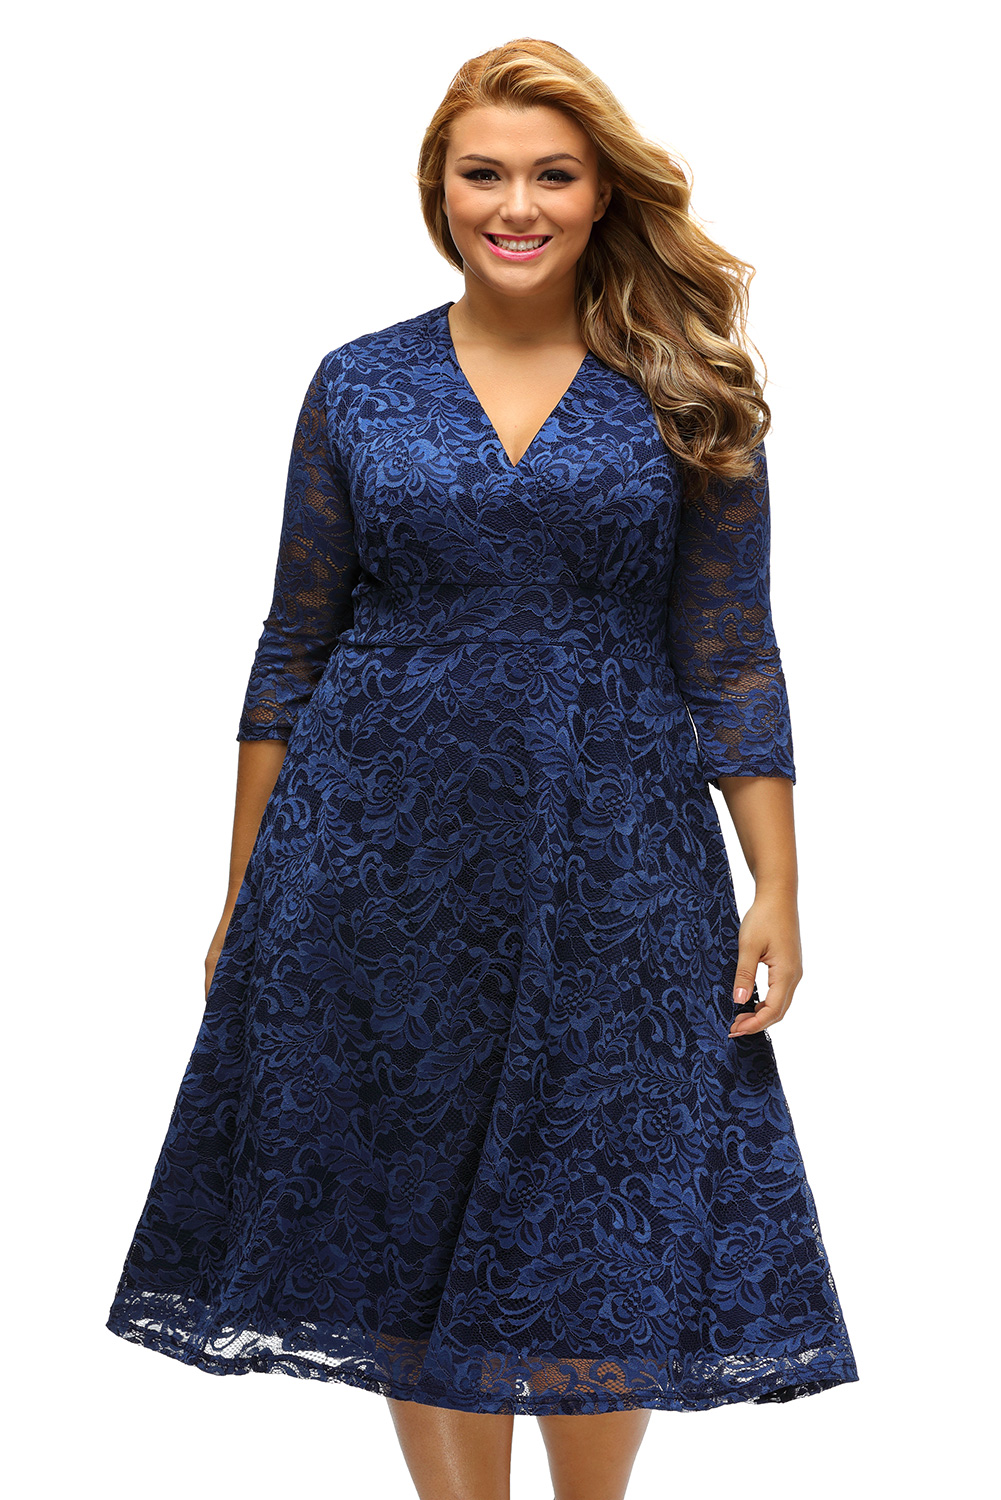 BY61442-5 Navy Blue Plus Size Surplice Lace Formal Skater Dress